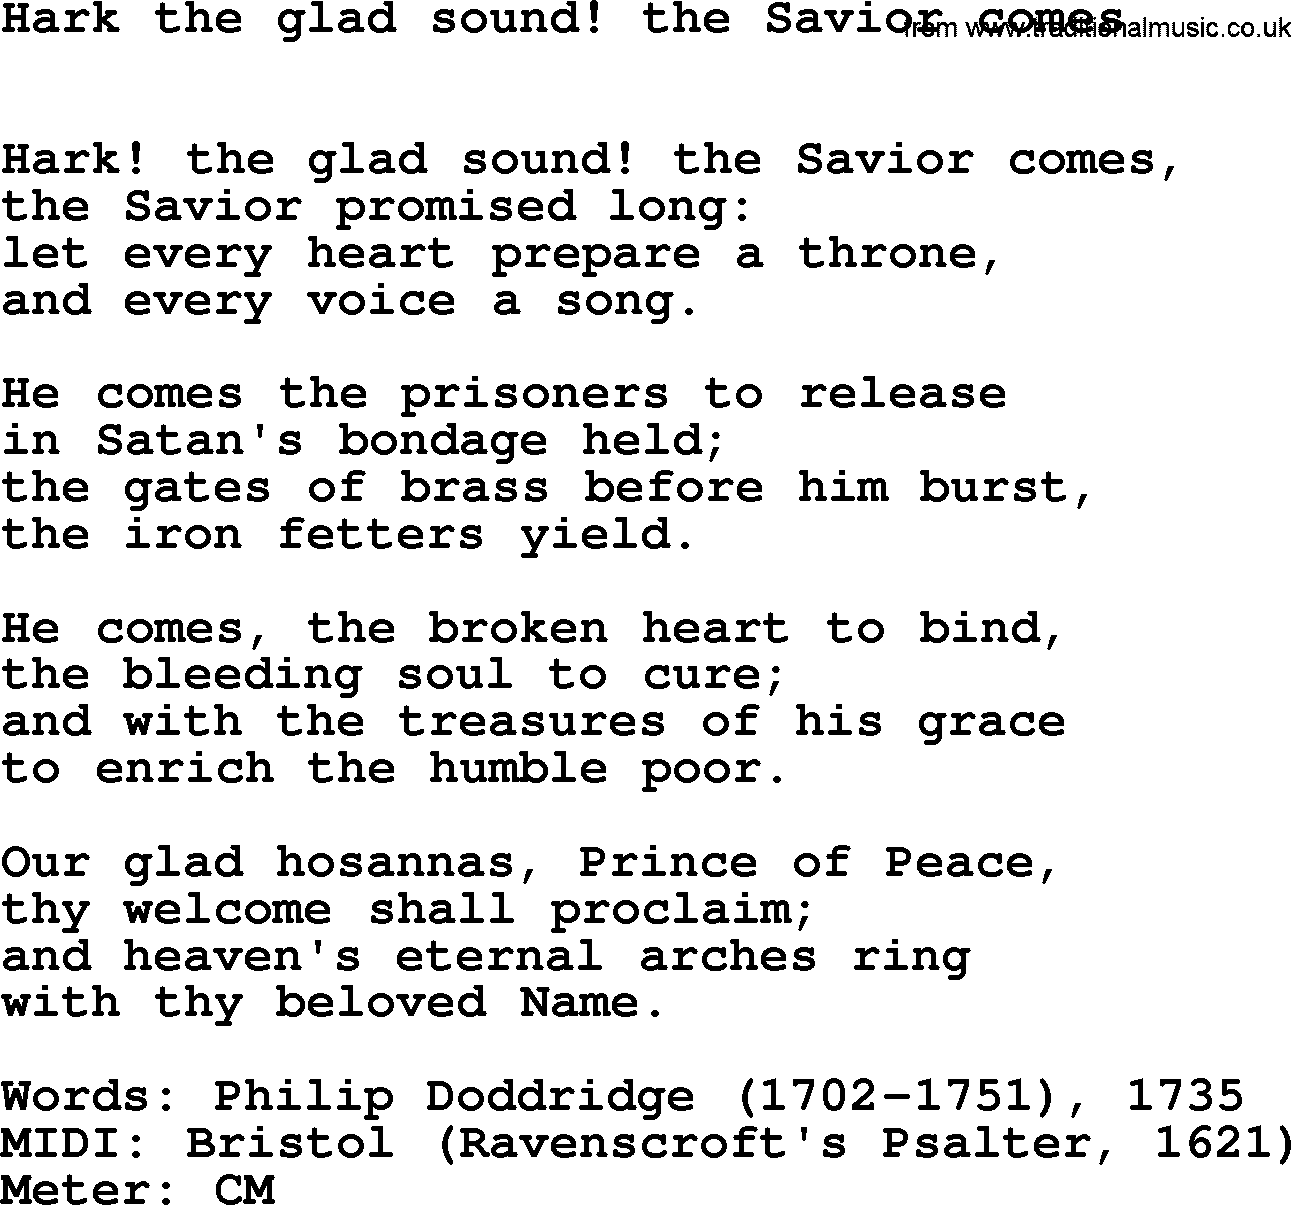 Book of Common Praise Hymn: Hark The Glad Sound! The Savior Comes.txt lyrics with midi music